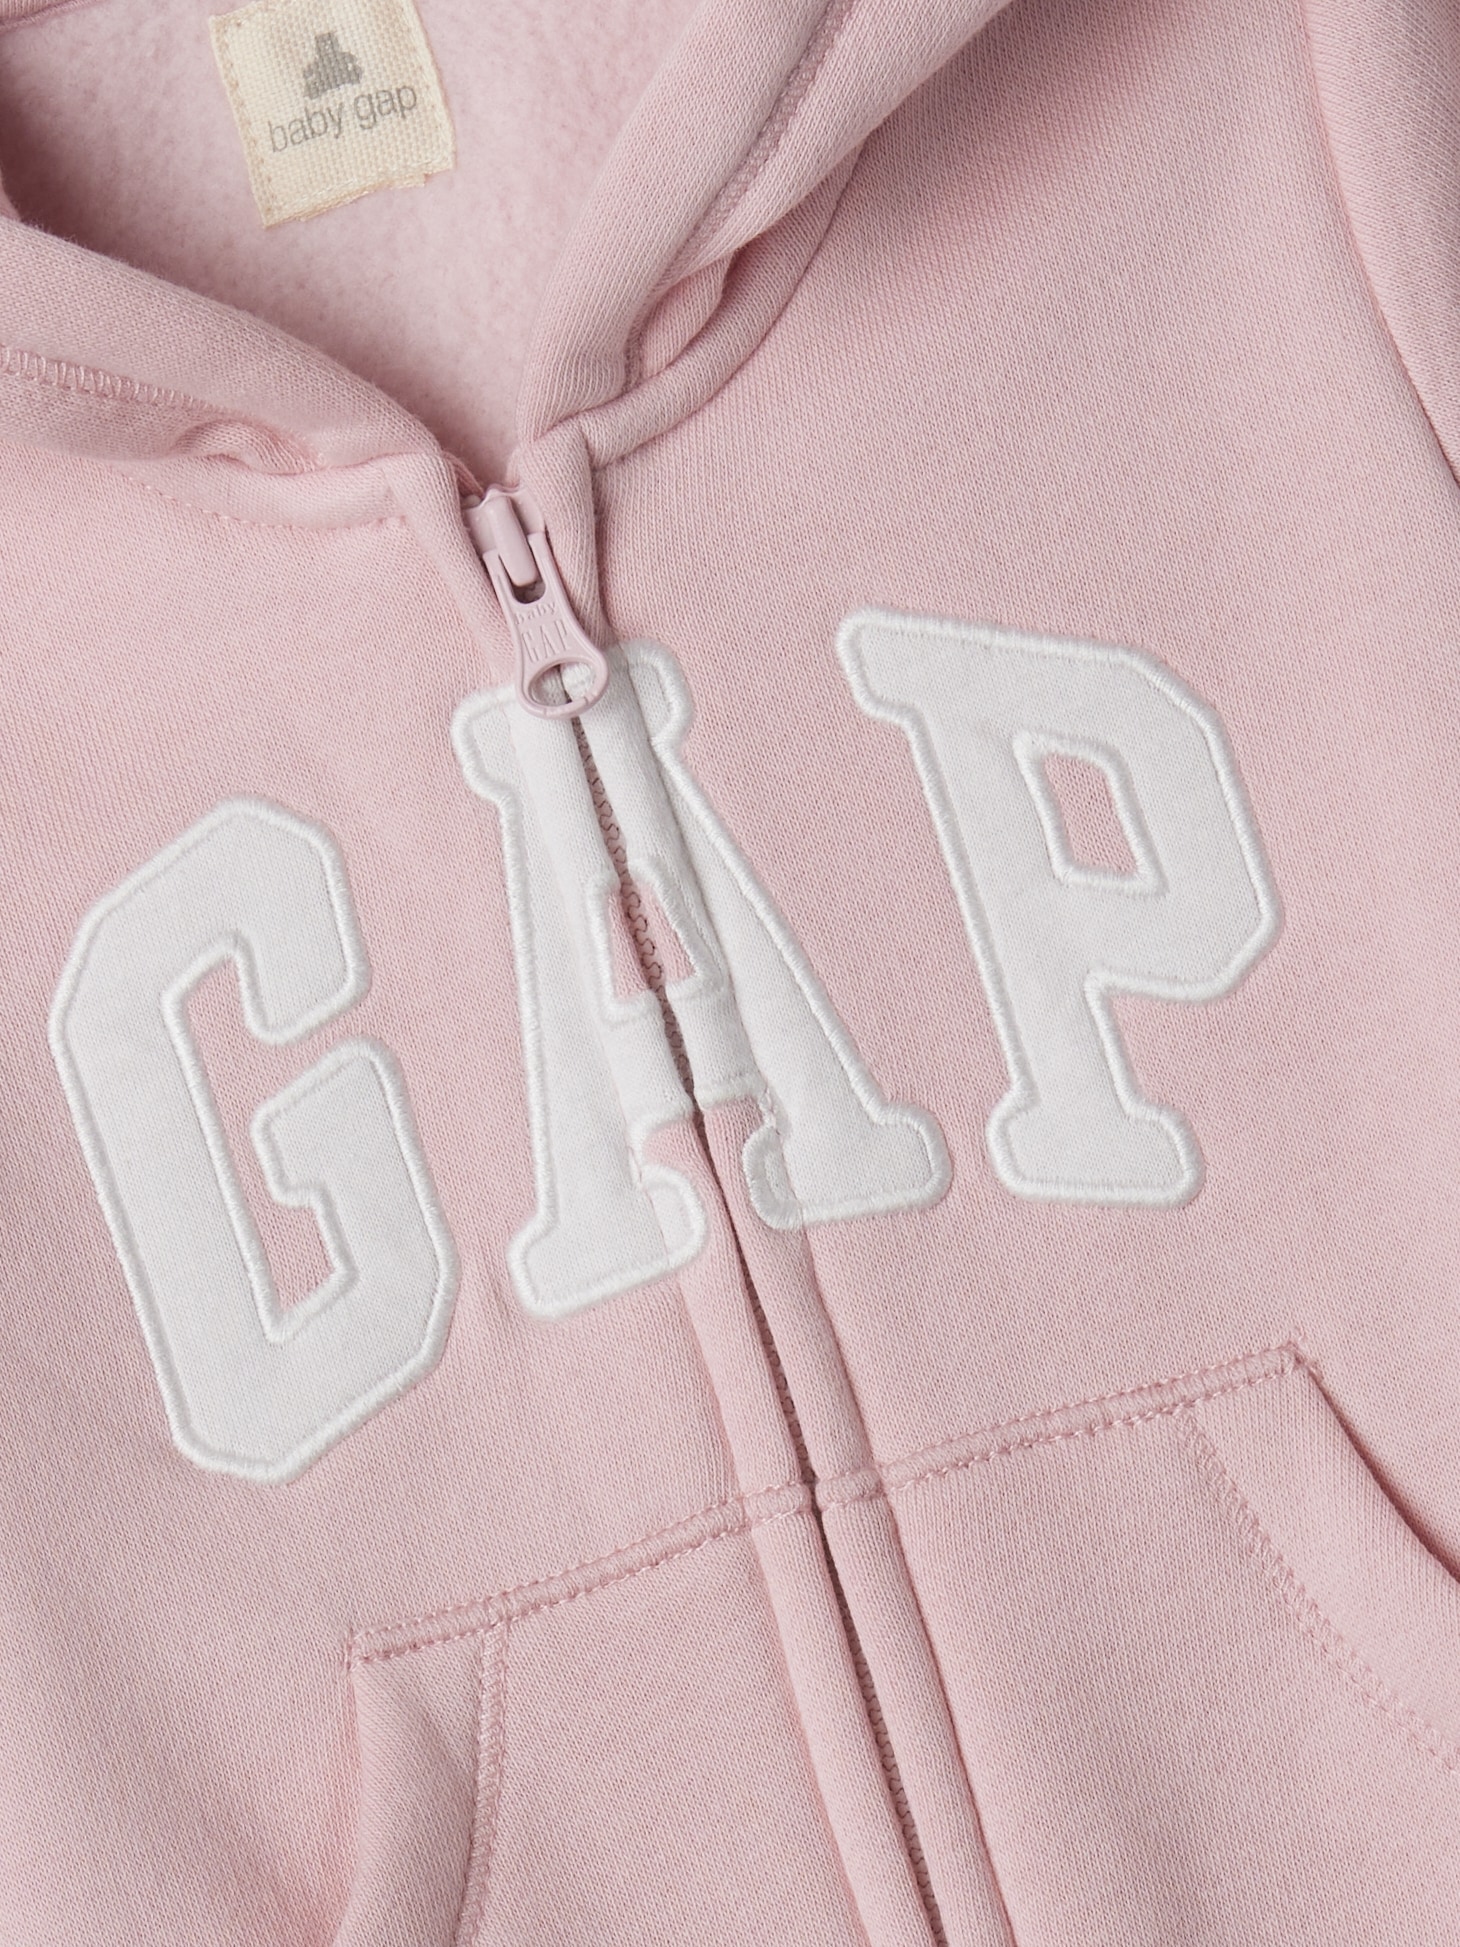 Baby Logo One-Piece | Gap Factory